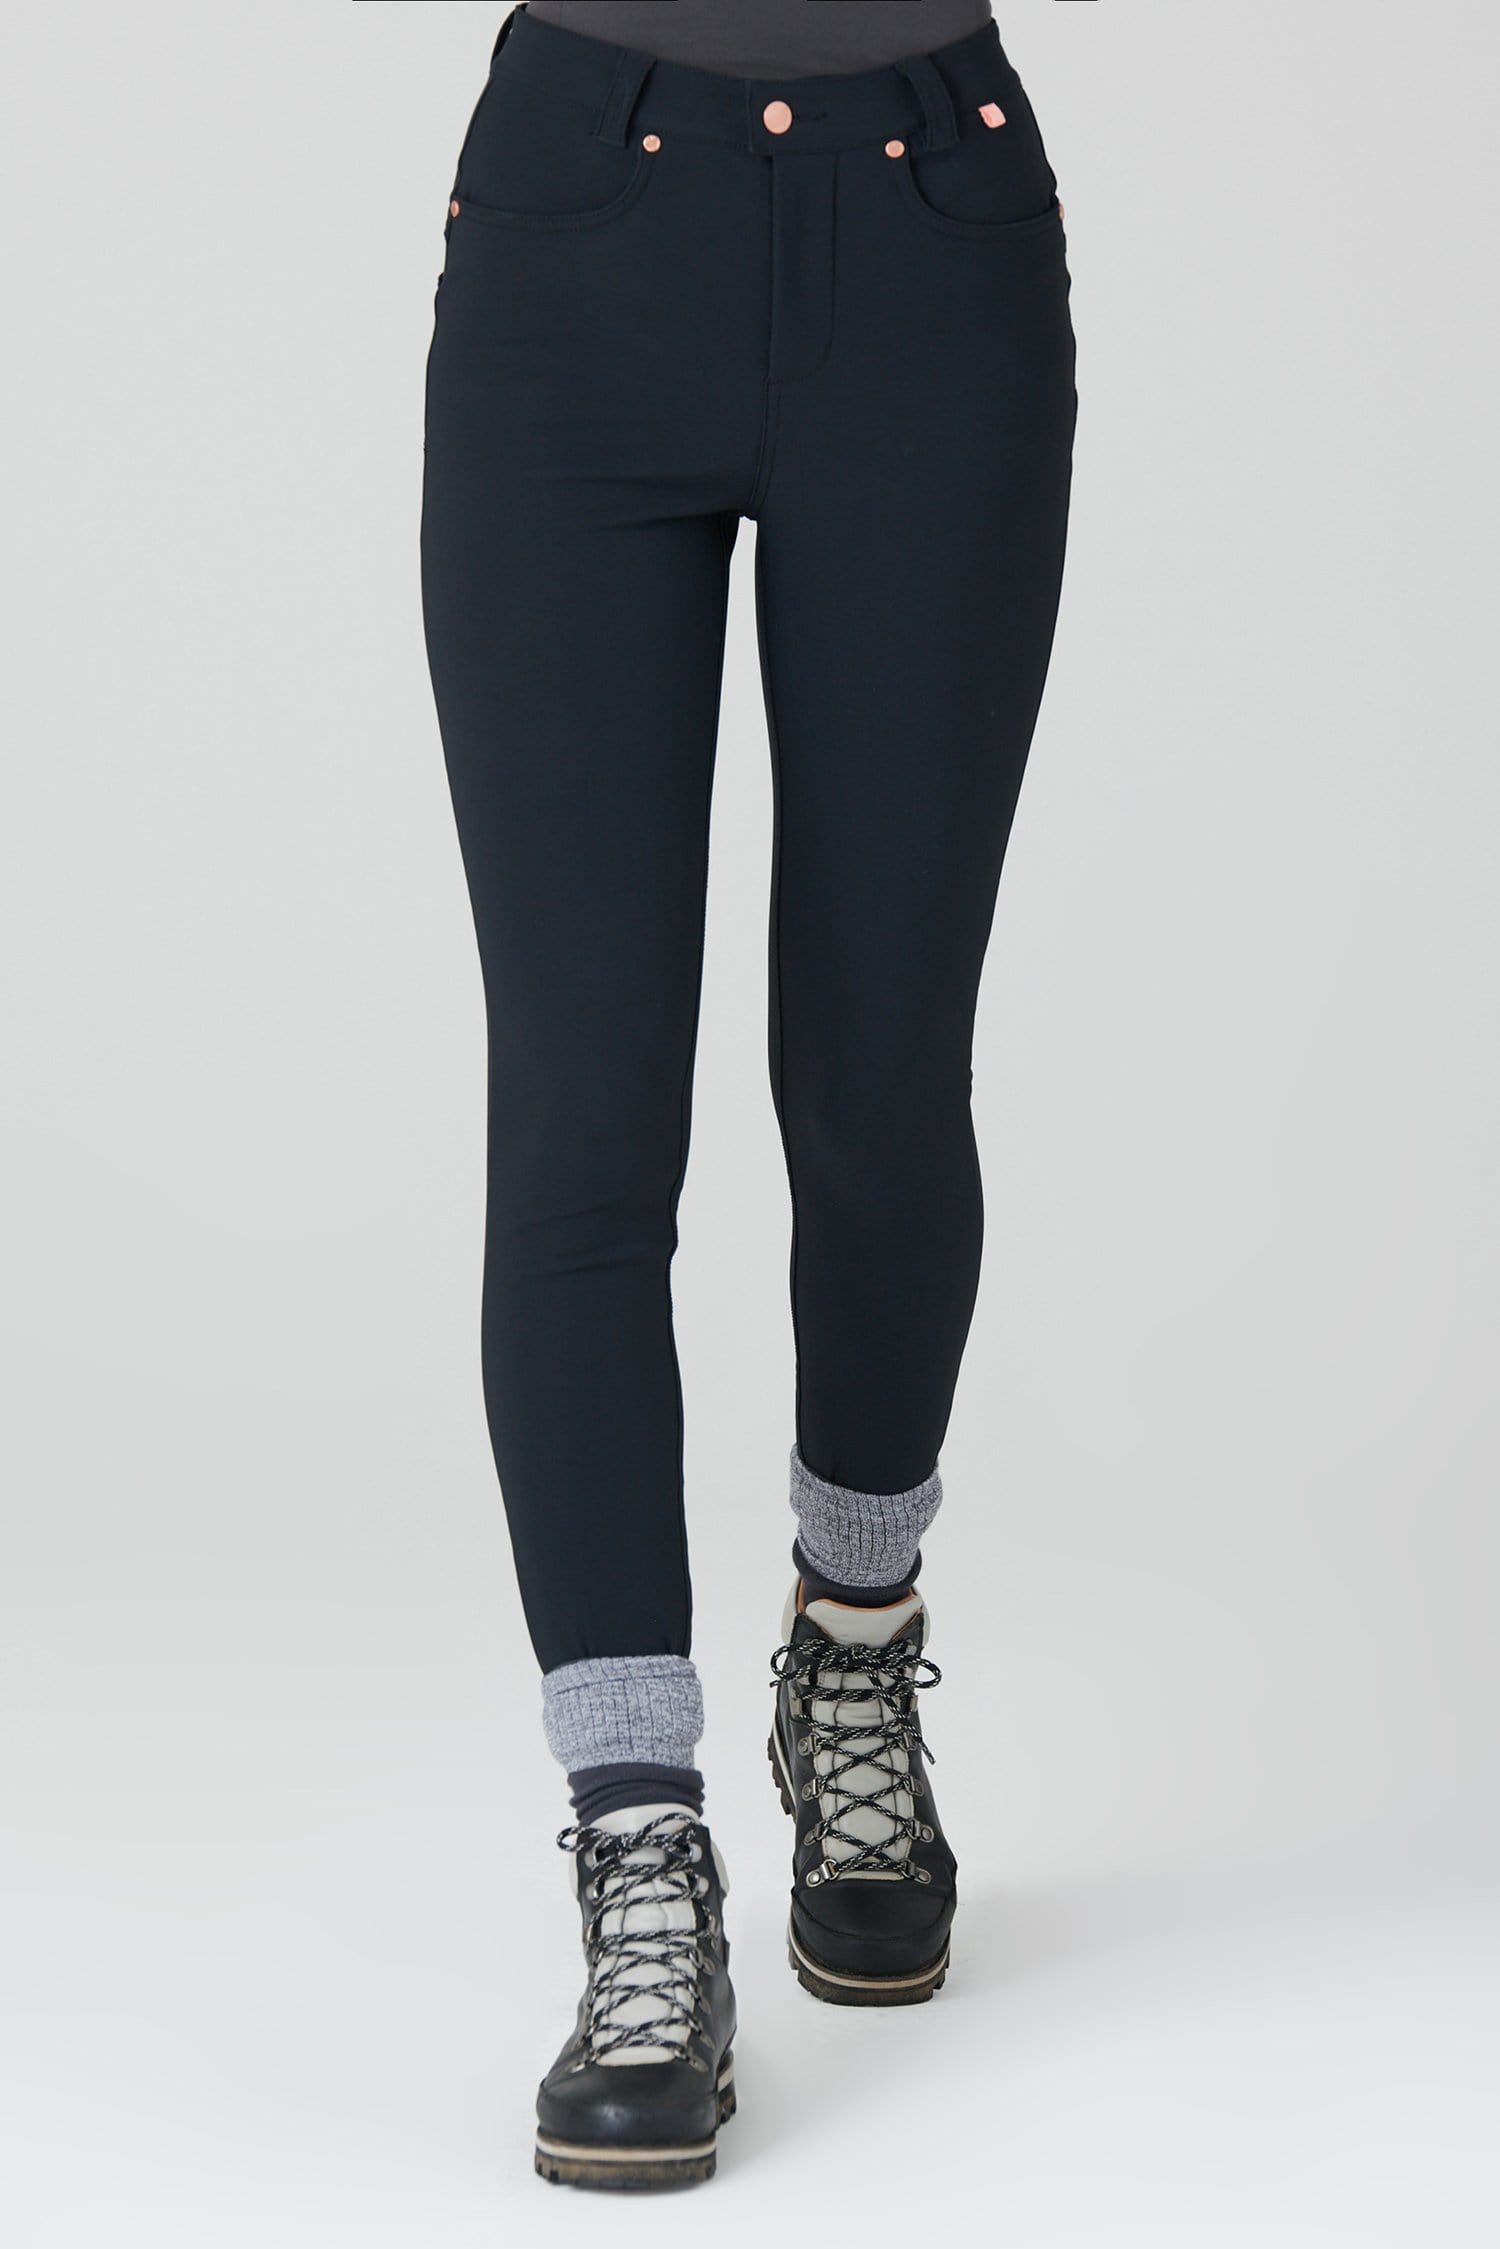 The Aventurite Stretch Skinny Outdoor Trousers - Black - 28p / Uk10 - Womens - Acai Outdoorwear